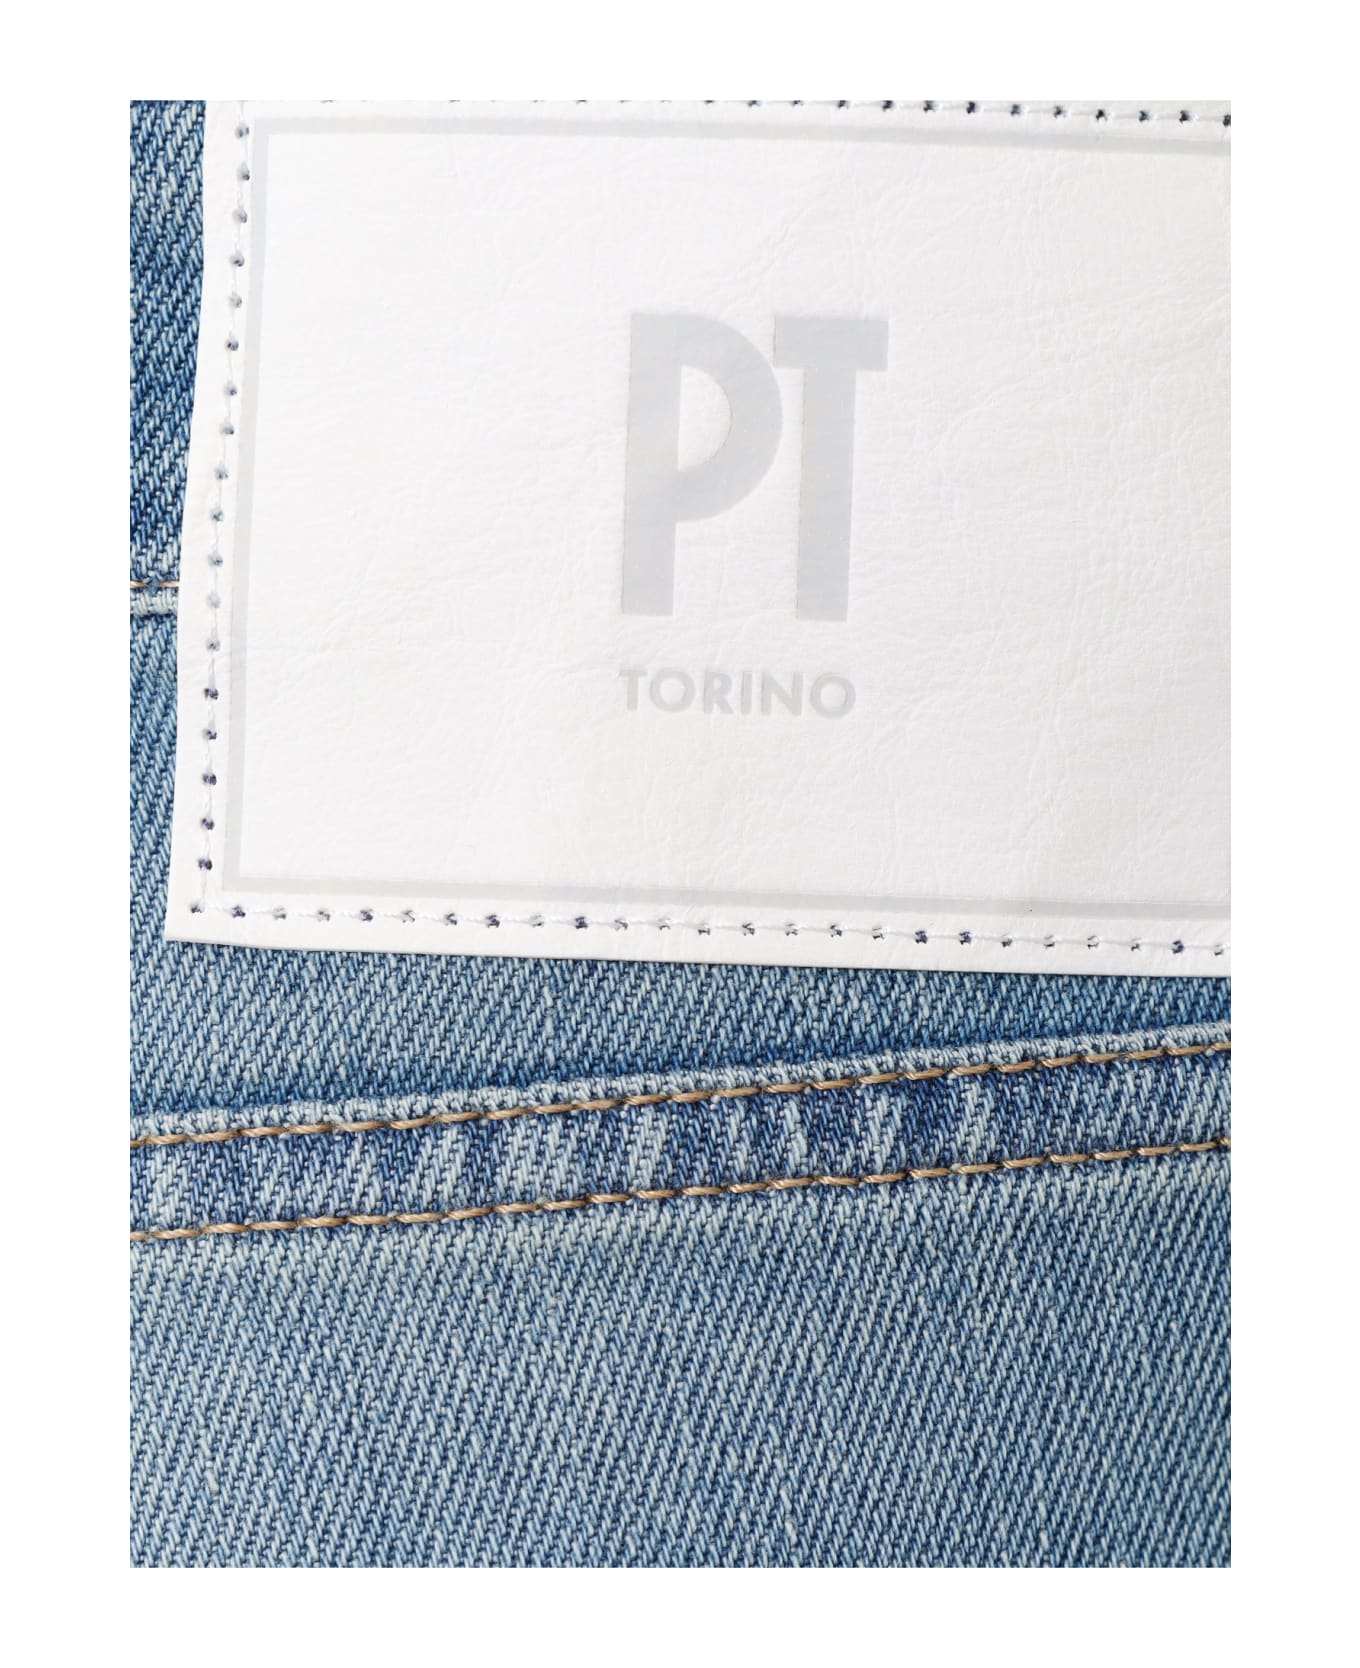 PT Torino Jeans - Blue デニム